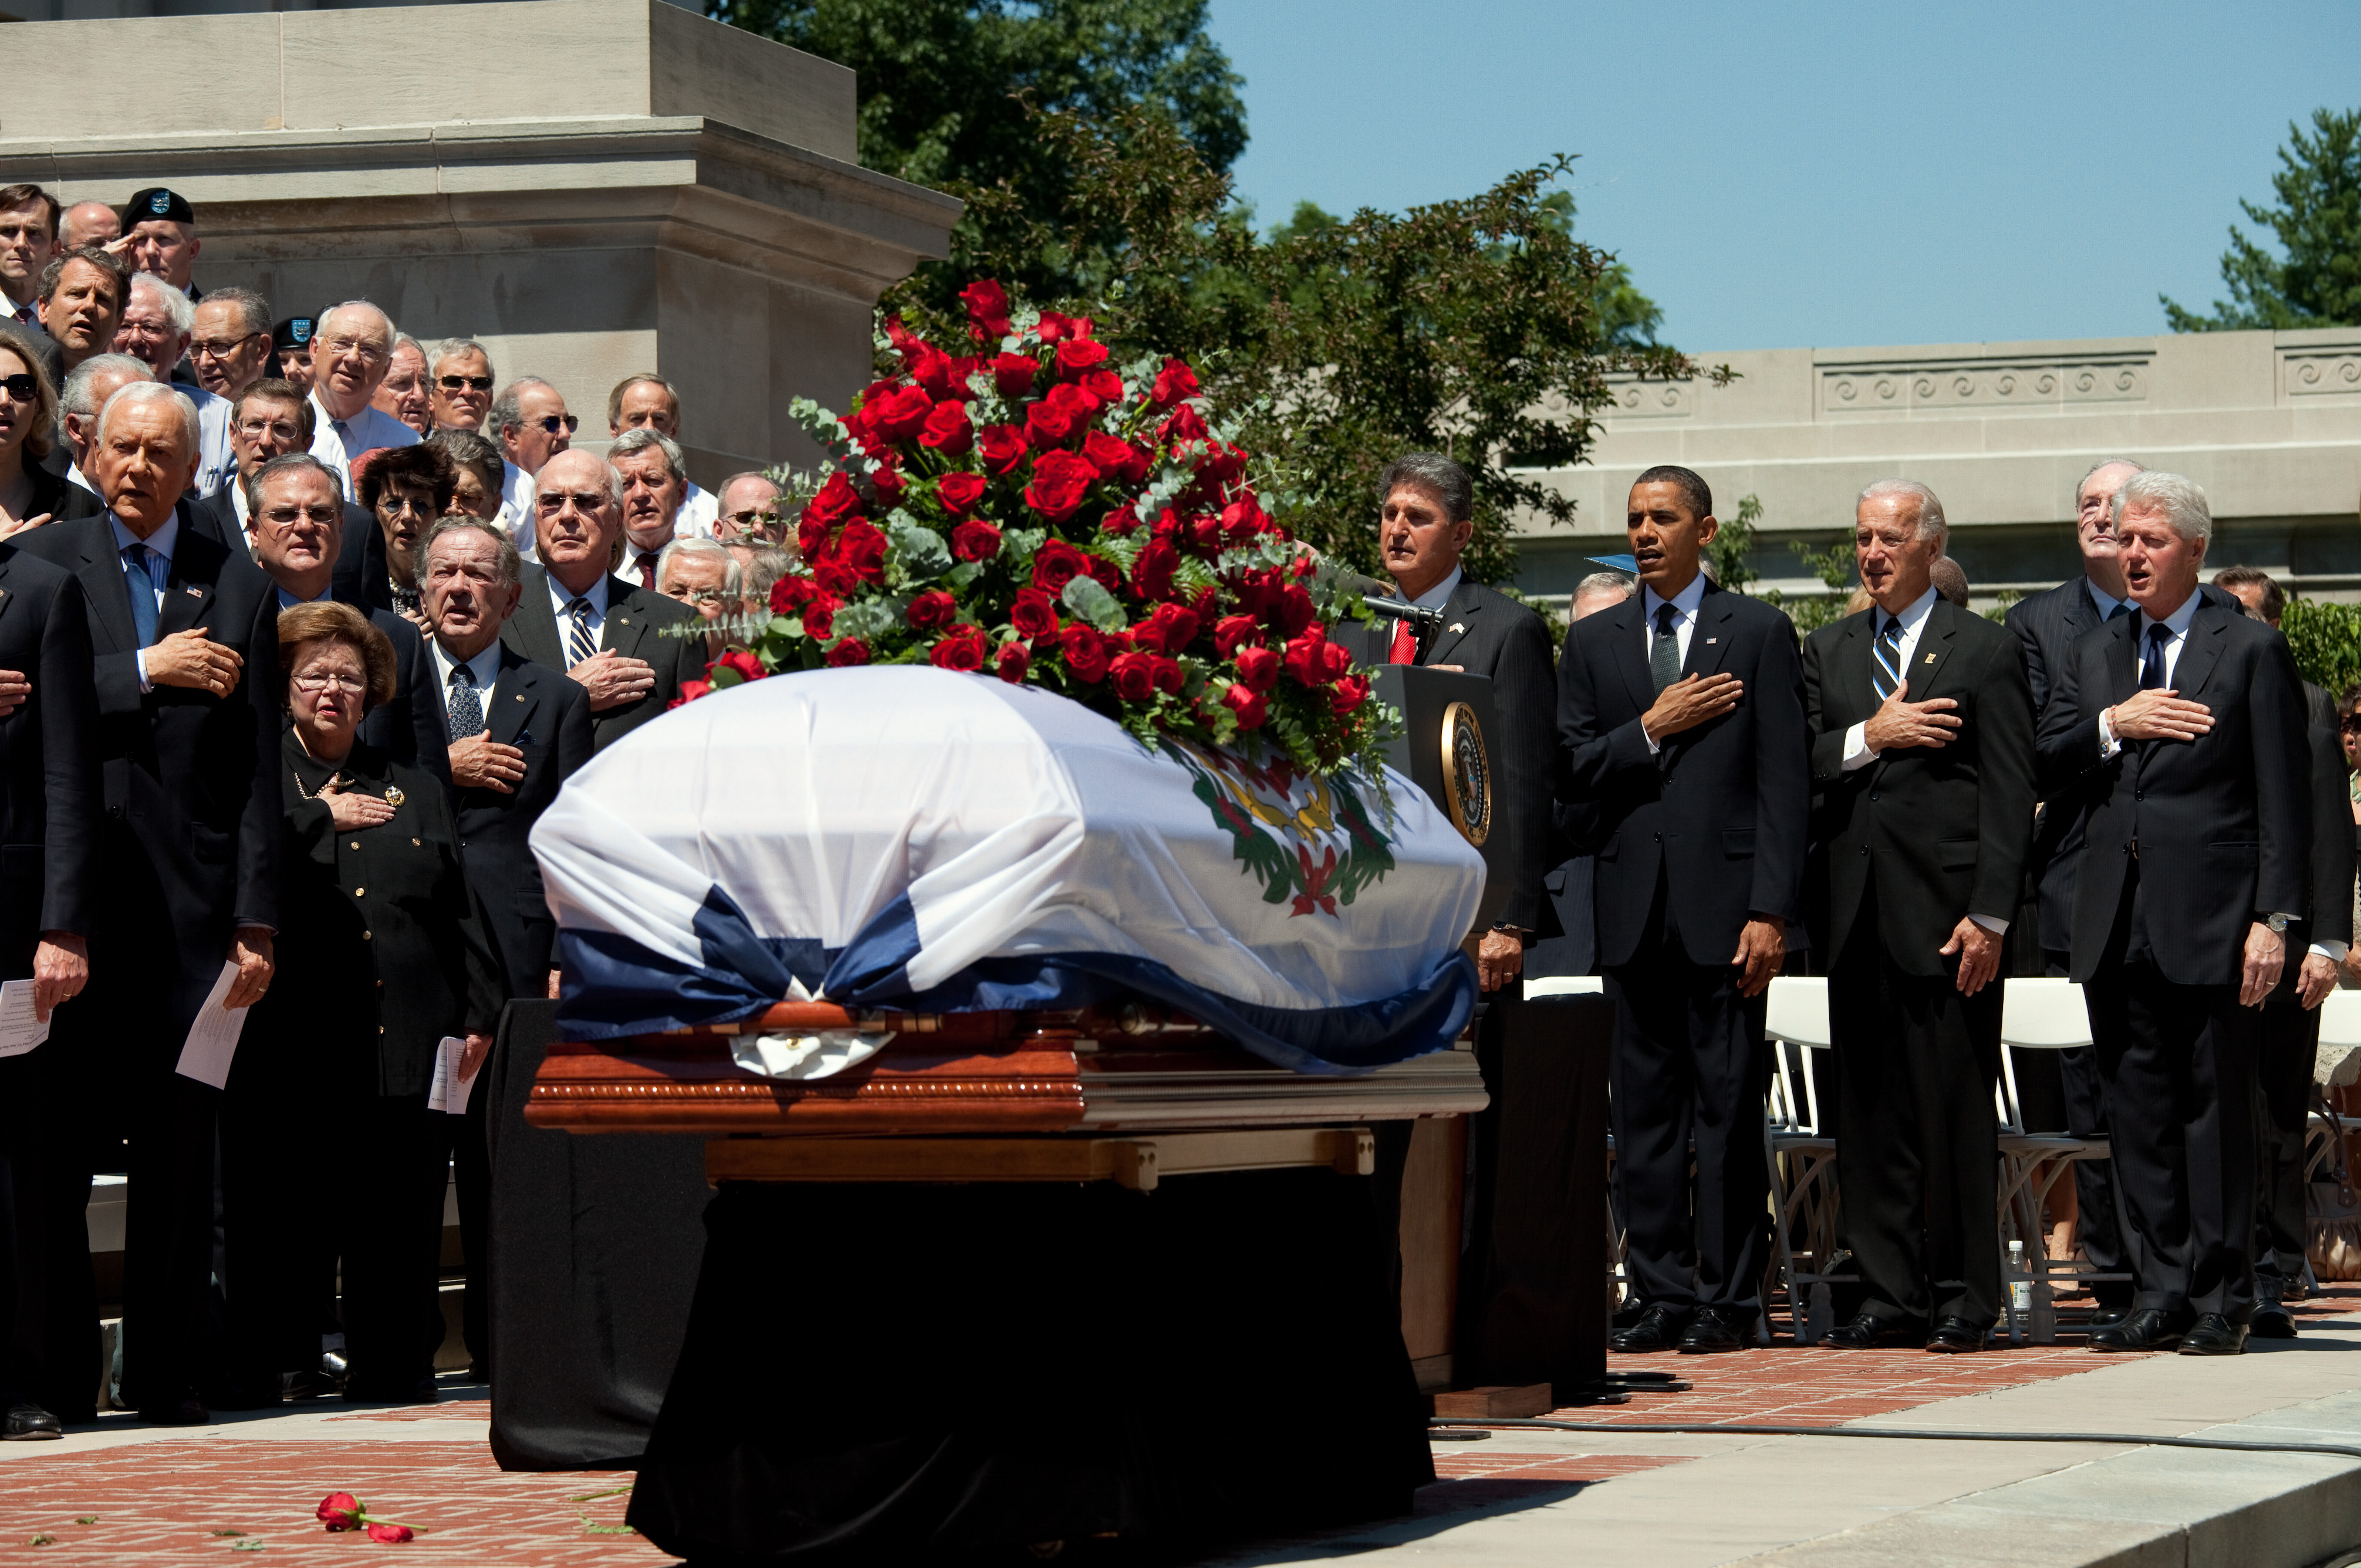 Senator_Byrd_funeral_service.jpg